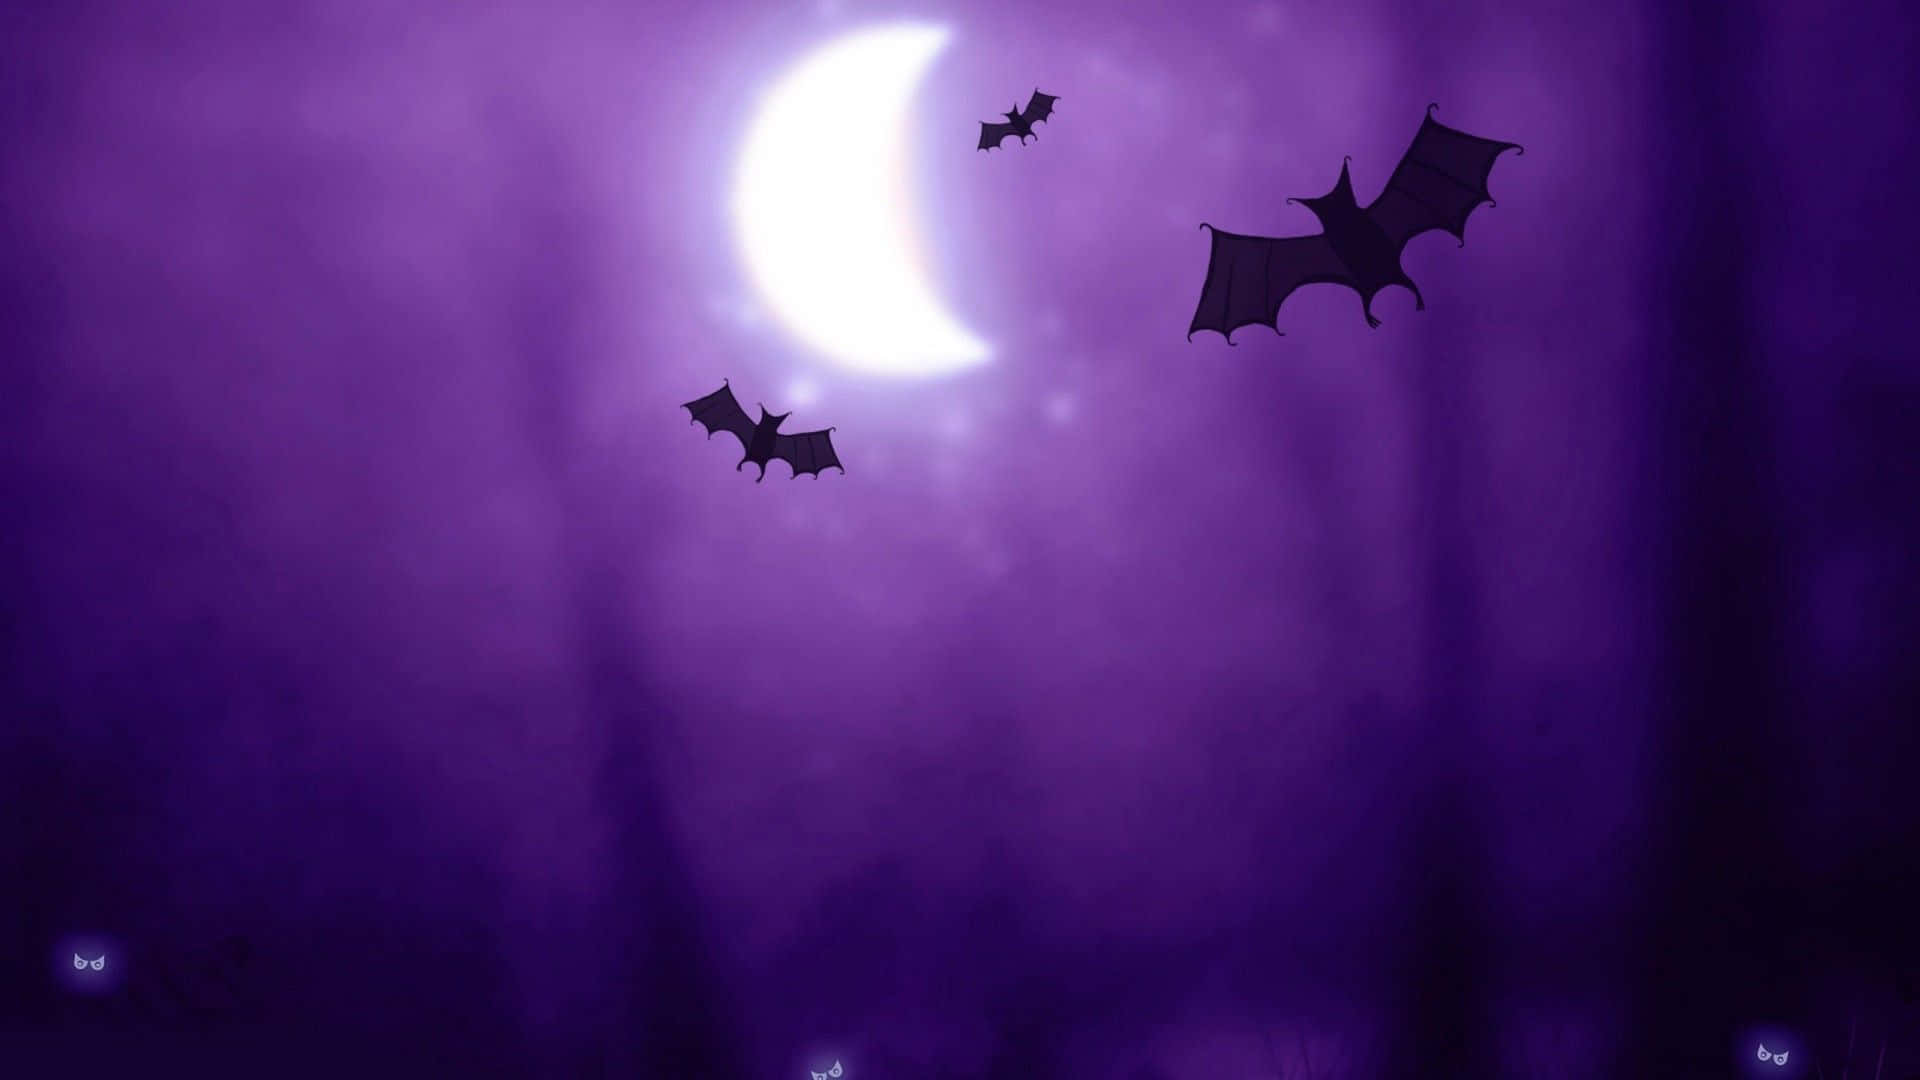 Dark Flying Bats in the Night Sky